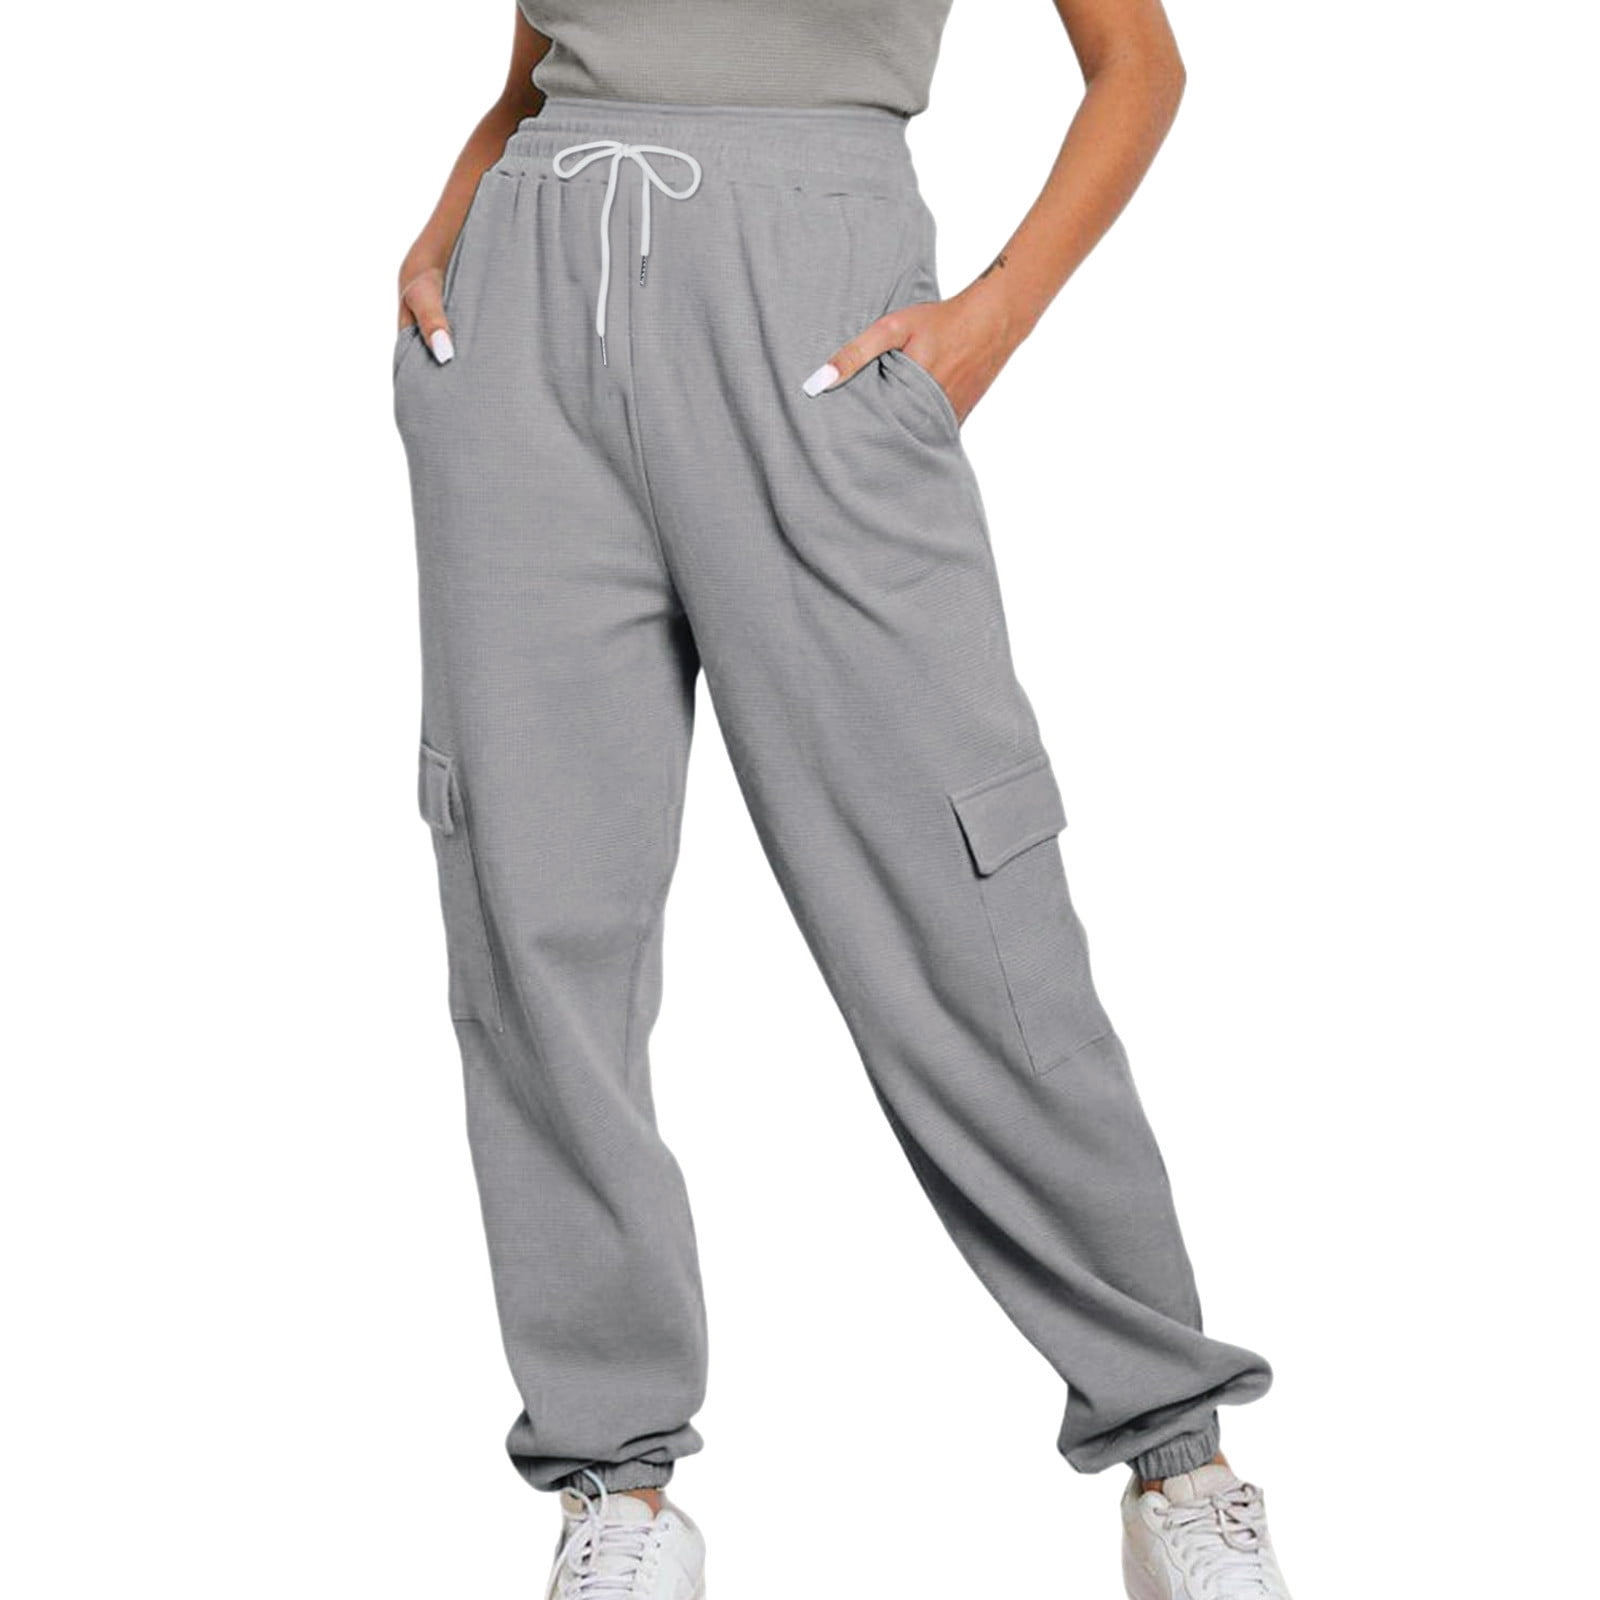 BUIgtTklOP Pants Women Plus Size Jogging Pants Casual SweatPants With  Pocket Elastic Waist Lounge Pants For Workout Running